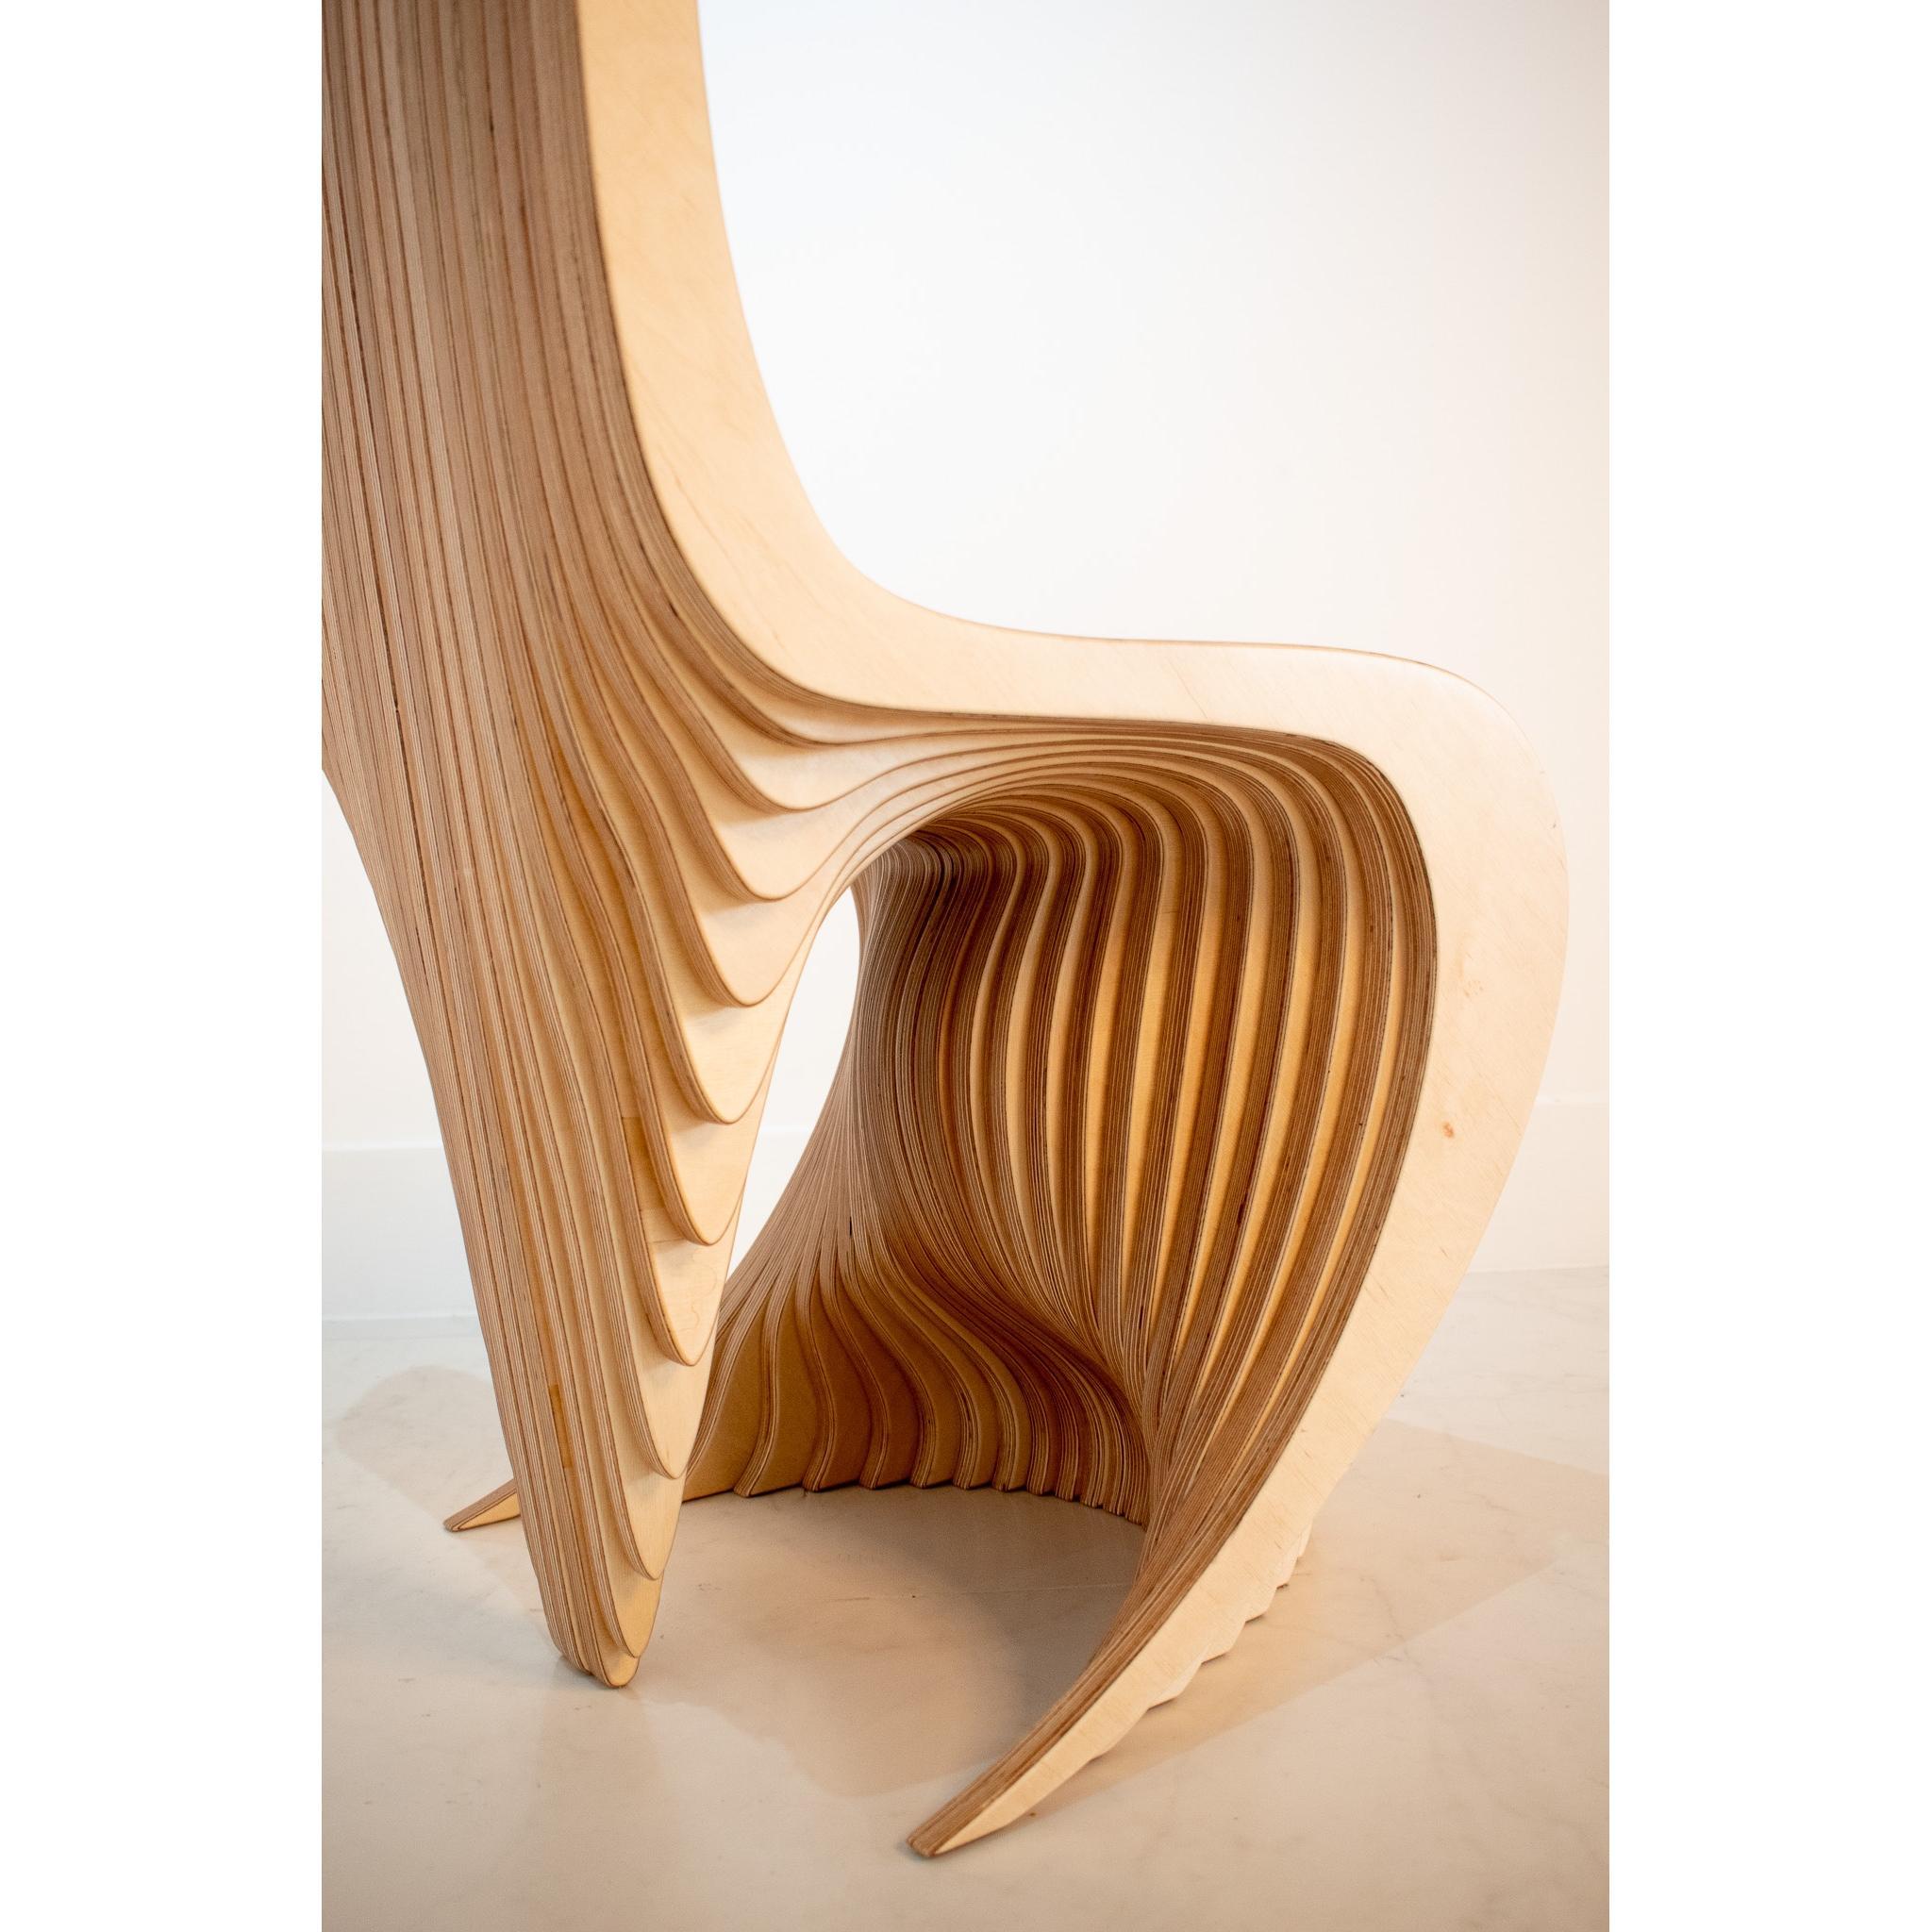 Birch Organic Design dining chair, handmade in the U.K by Antique modern Mix